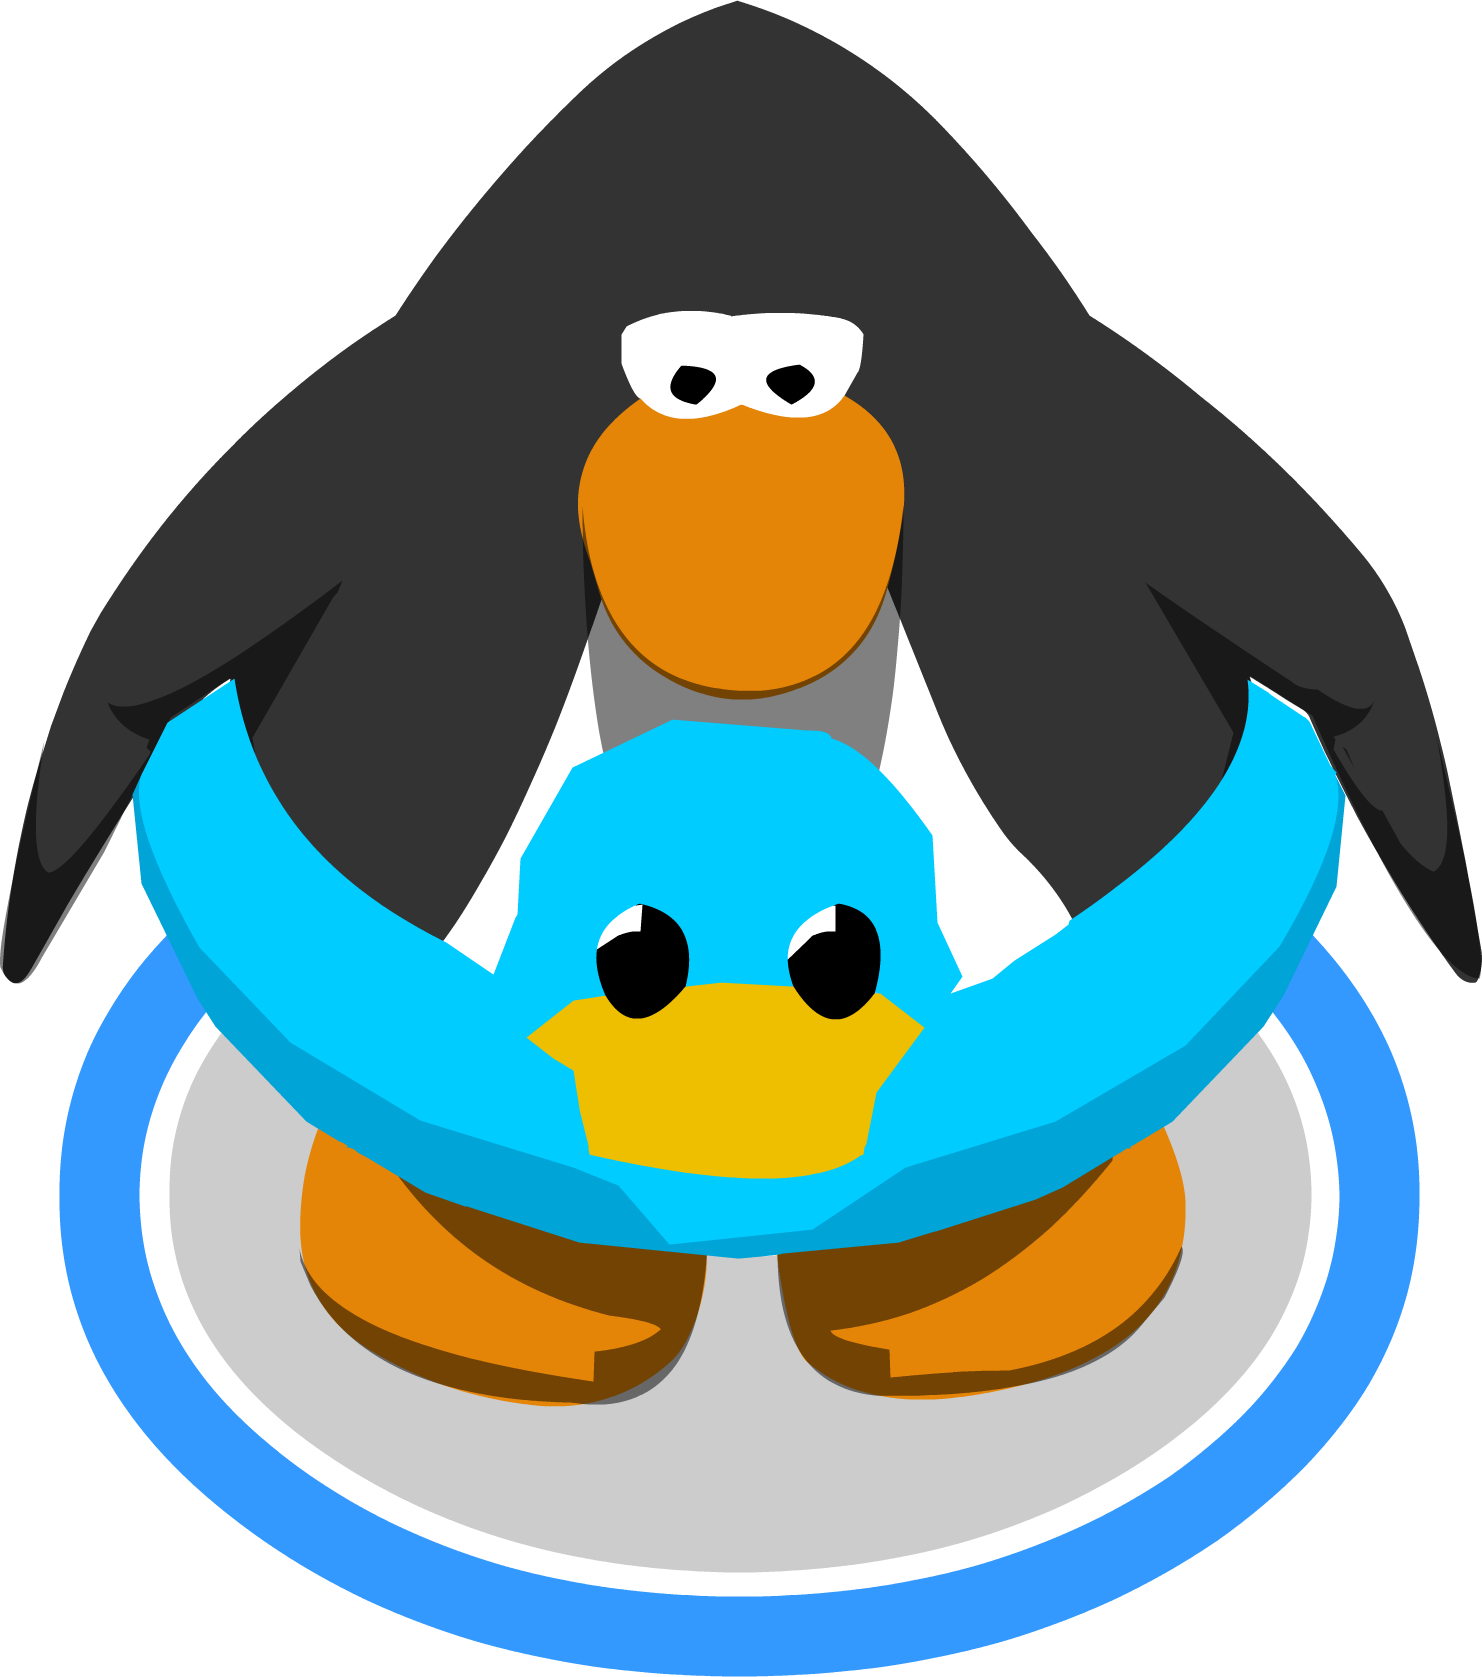 Duck source. Игра на картине с пингвинами. Аватар Пингвин на почту. Club Penguin avatar. Blue Duck.